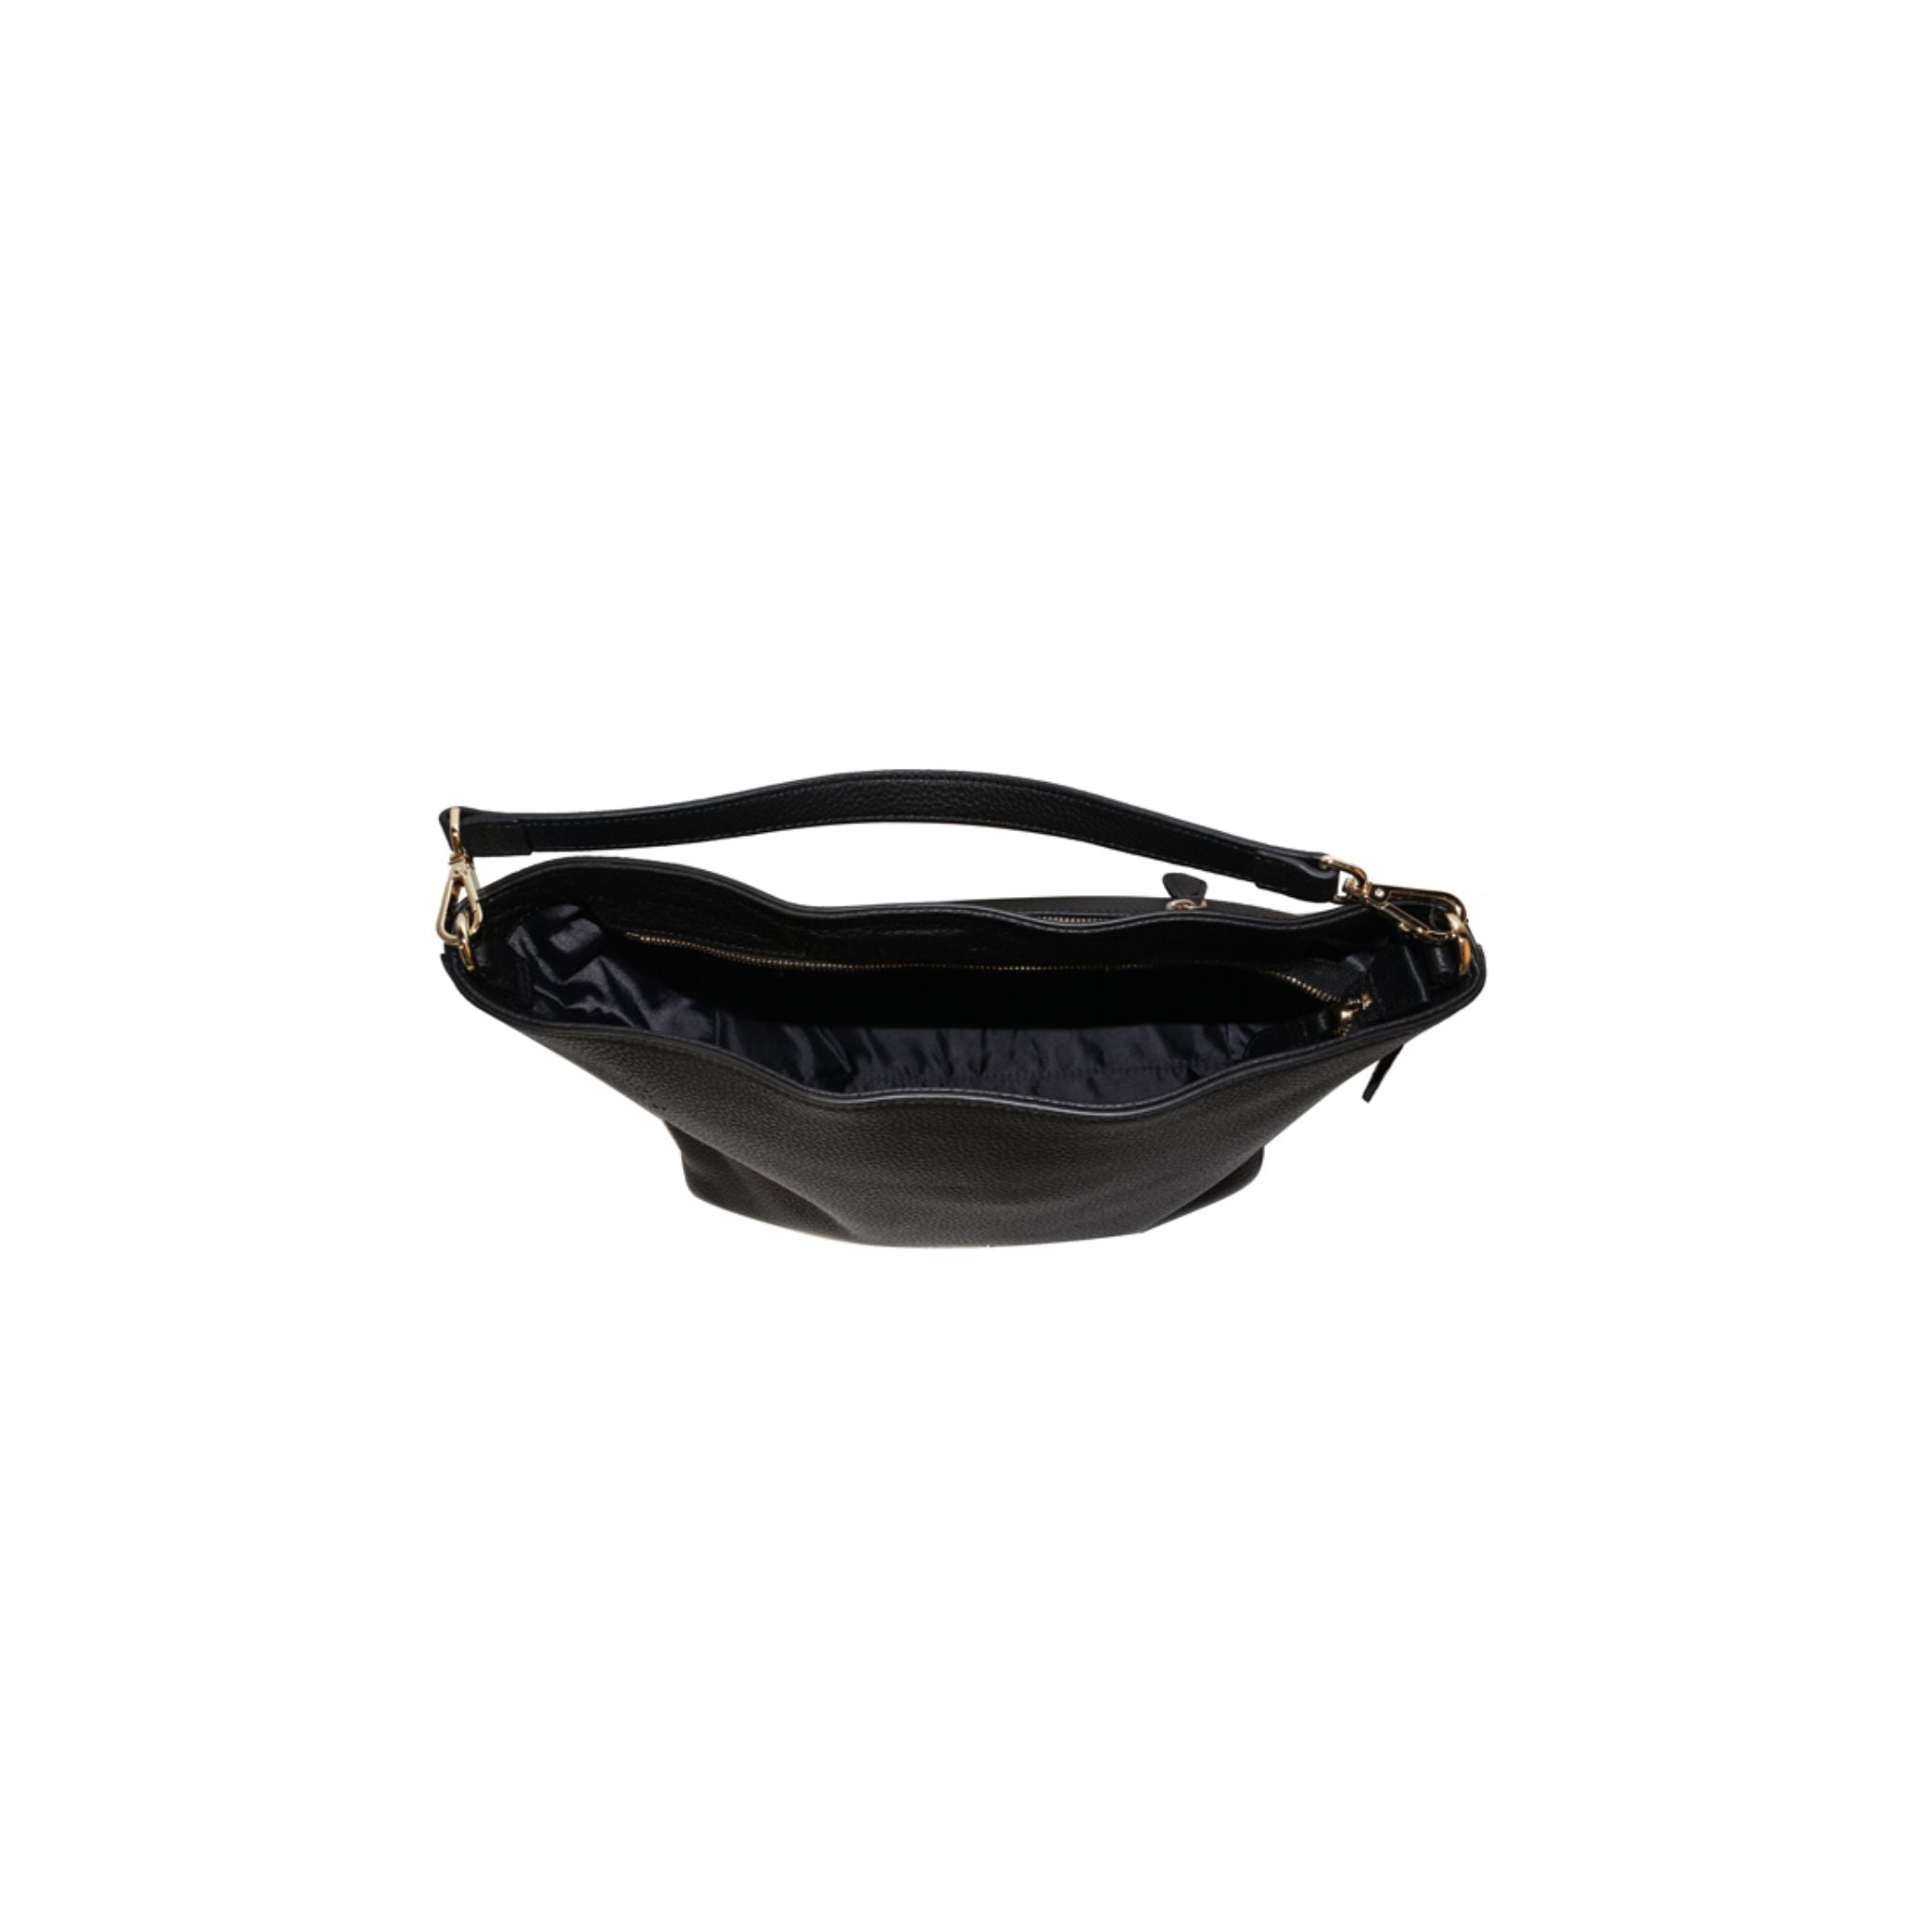 Valentino Rudy Full Leather Hobo Bag - Black (70277-002-08)